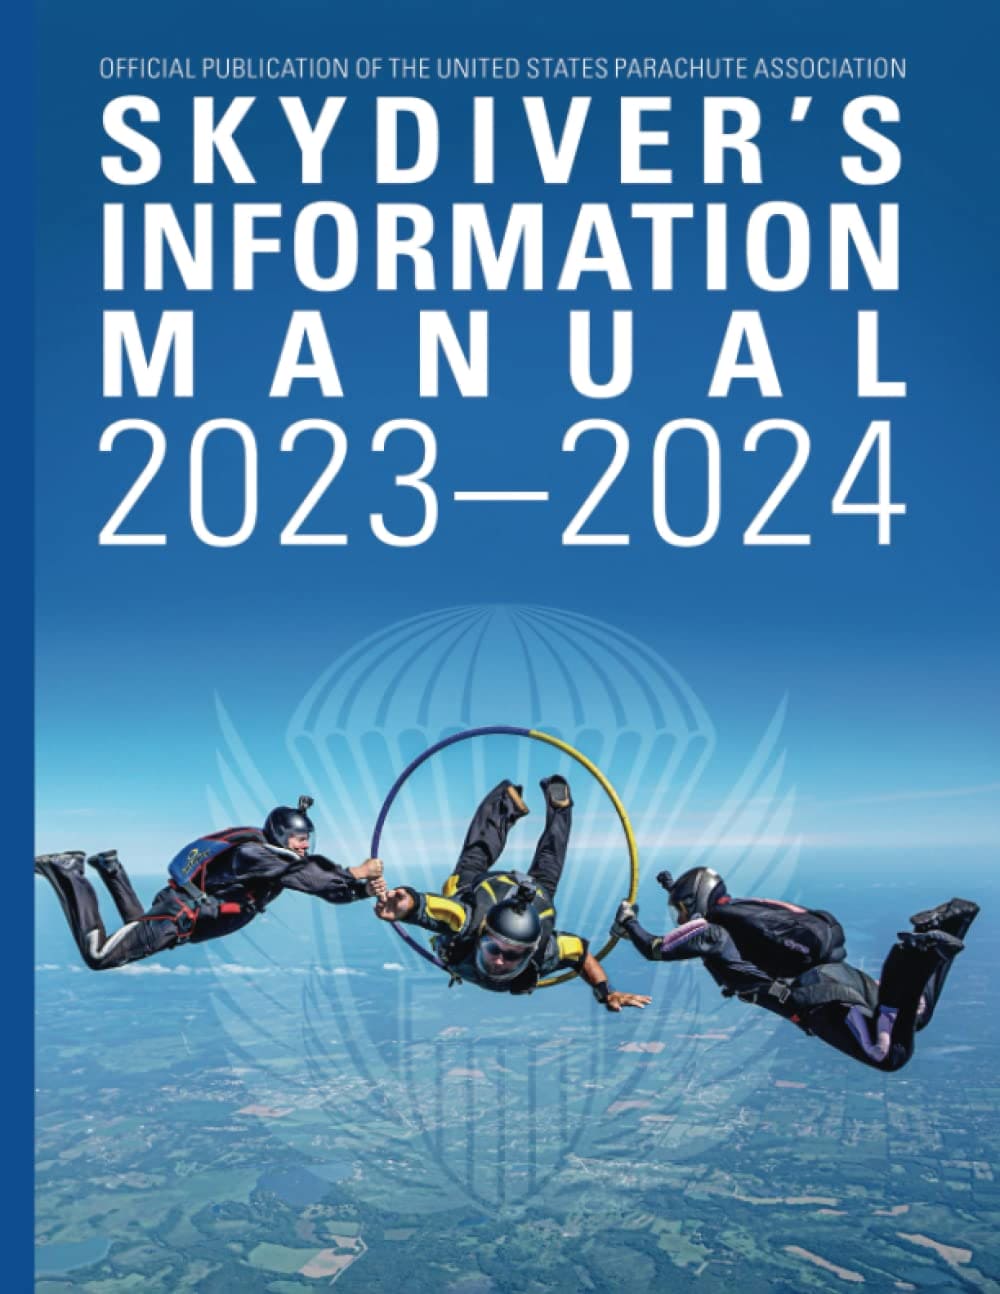 SKYDIVERS INFORMATION MANUAL 2023-2024